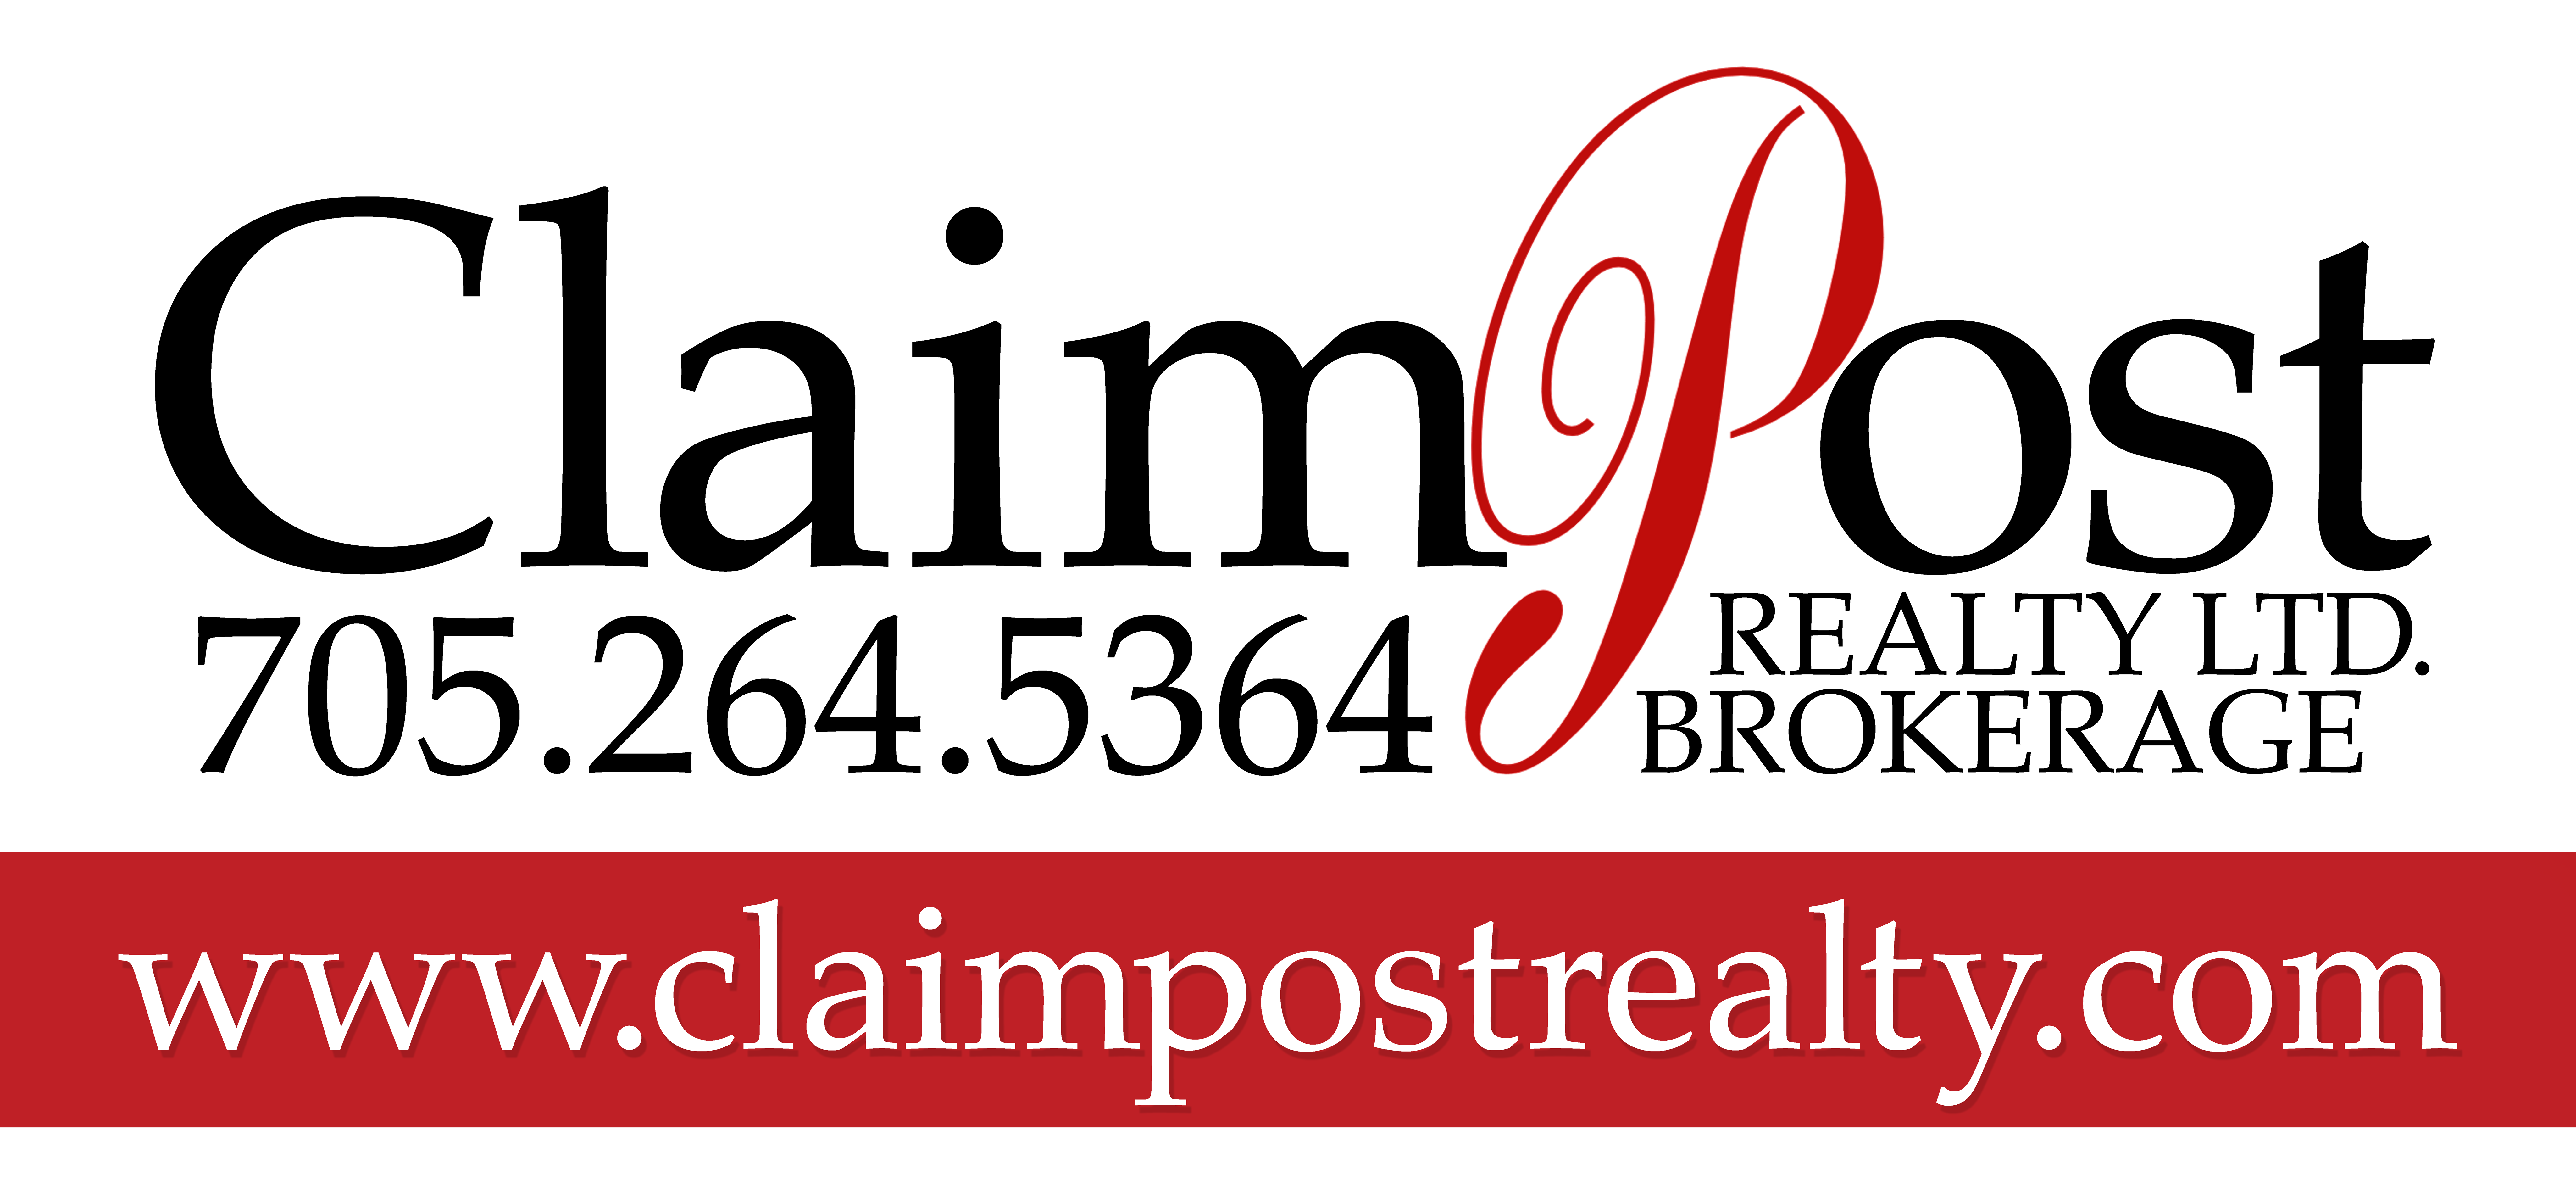 Claimpost Realty Ltd. Brokerage - Gagnon, Stephanie